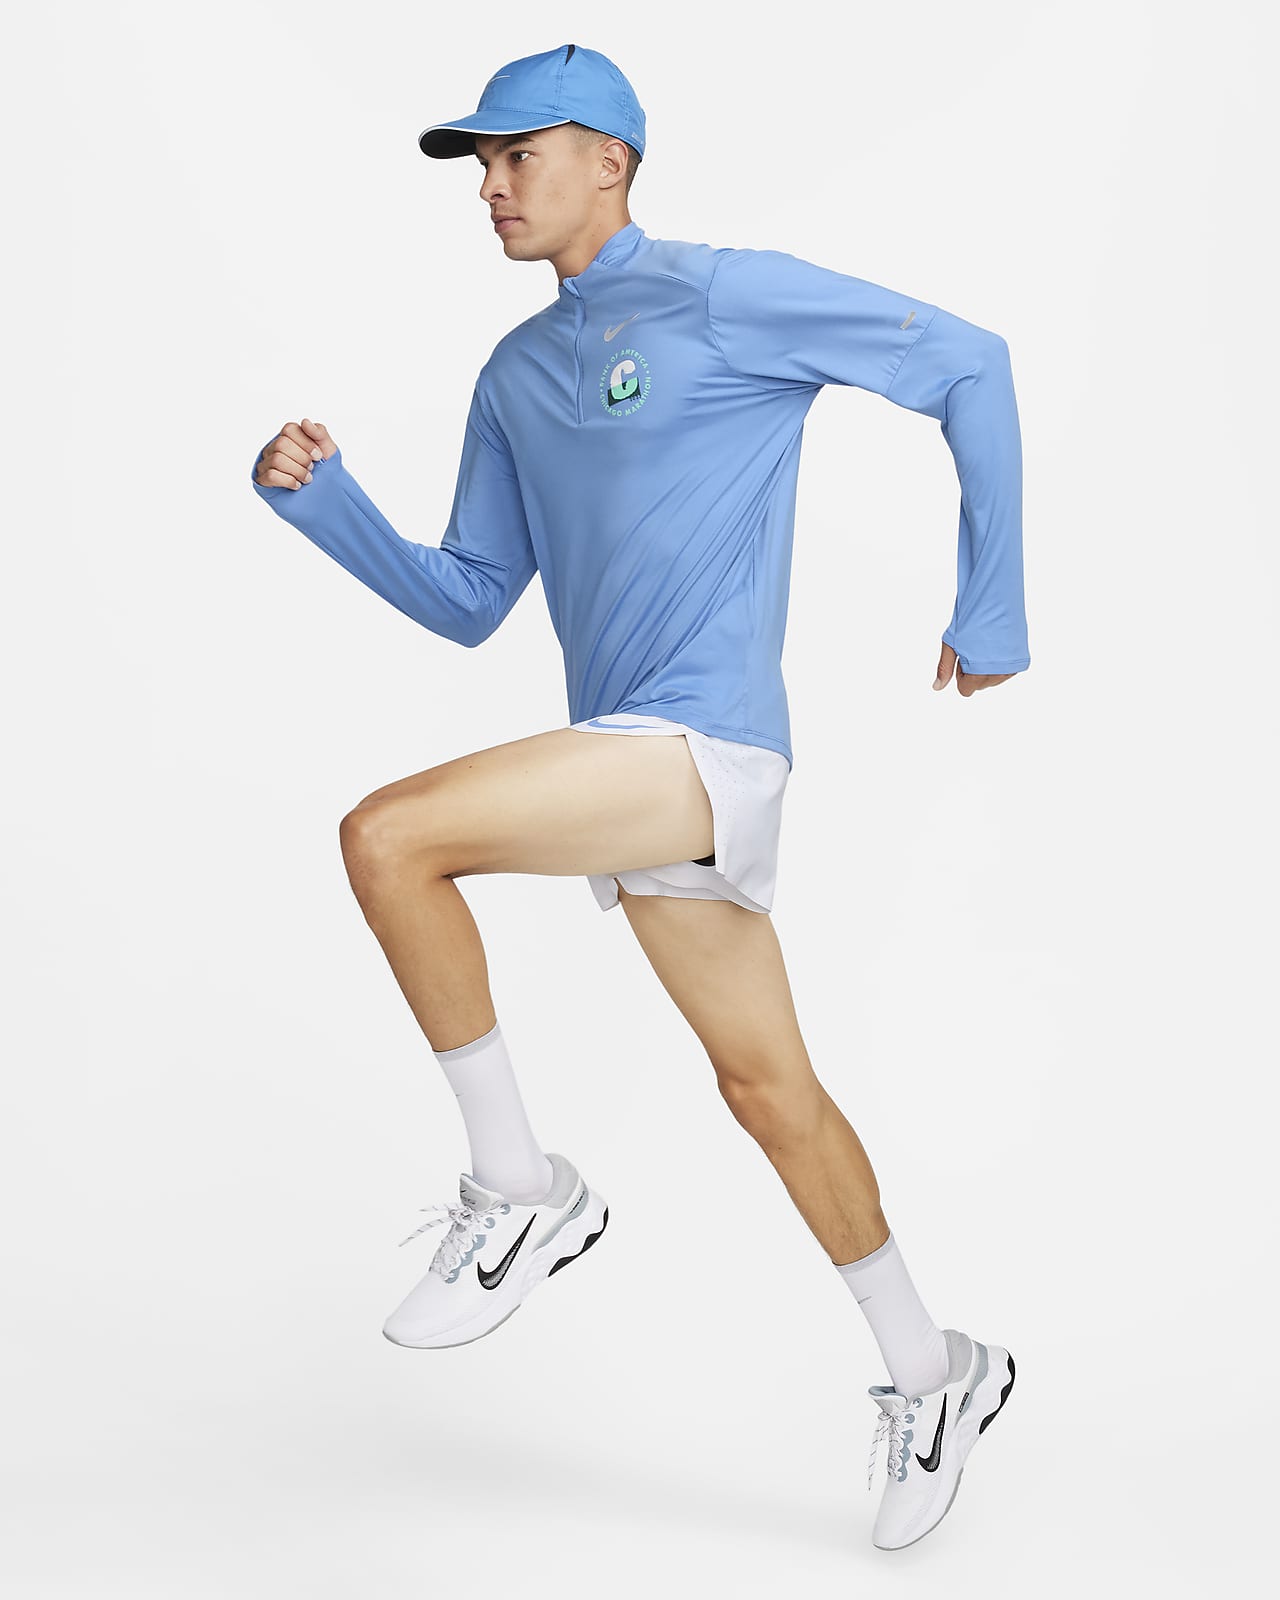 Mens Shirts Dry Basketball Short Sleeve Mens Running Jogging Shirt